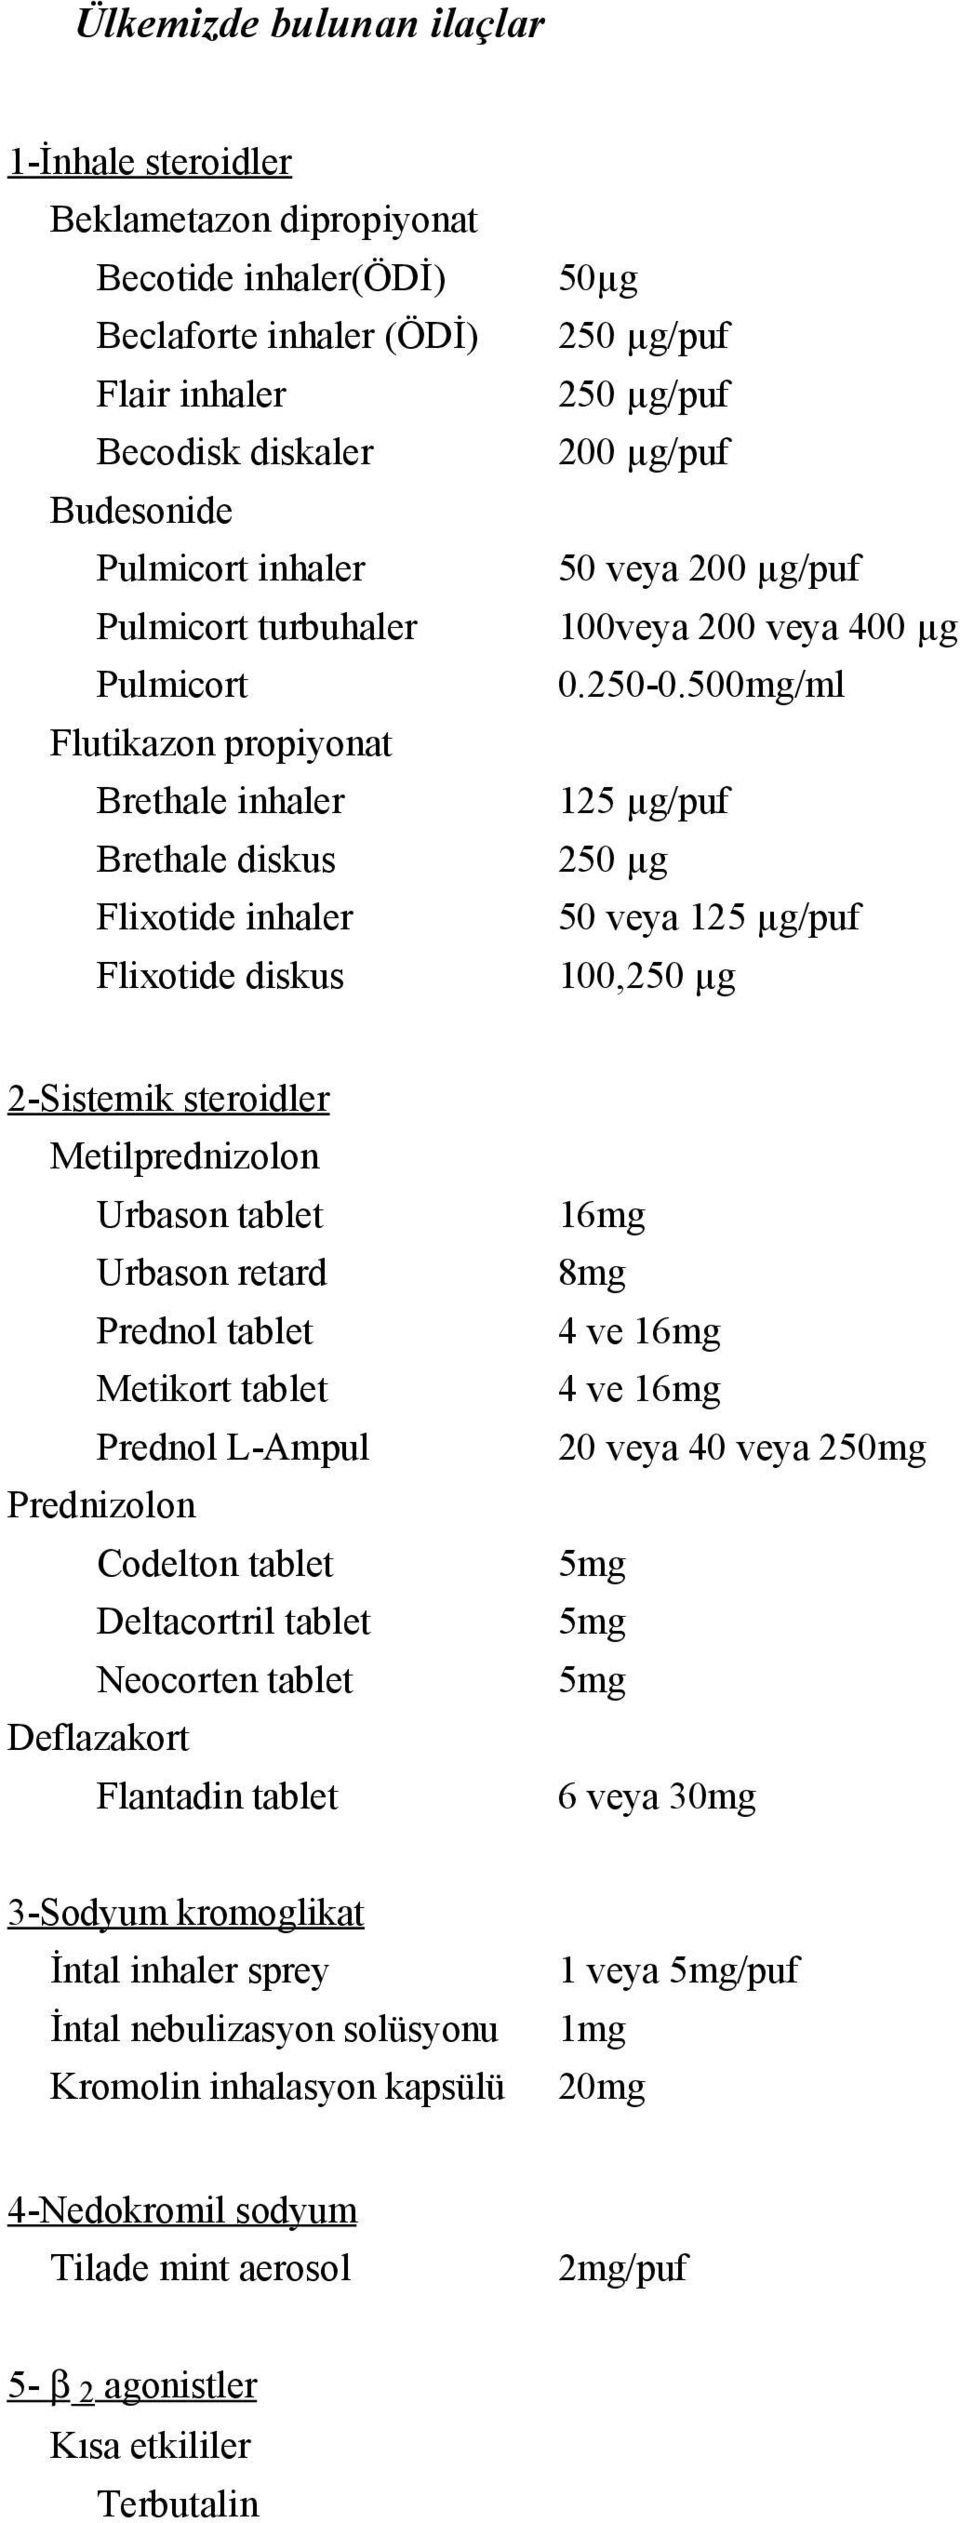 500mg/ml Flutikazon propiyonat Brethale inhaler 125 µg/puf Brethale diskus 250 µg Flixotide inhaler 50 veya 125 µg/puf Flixotide diskus 100,250 µg 2-Sistemik steroidler Metilprednizolon Urbason